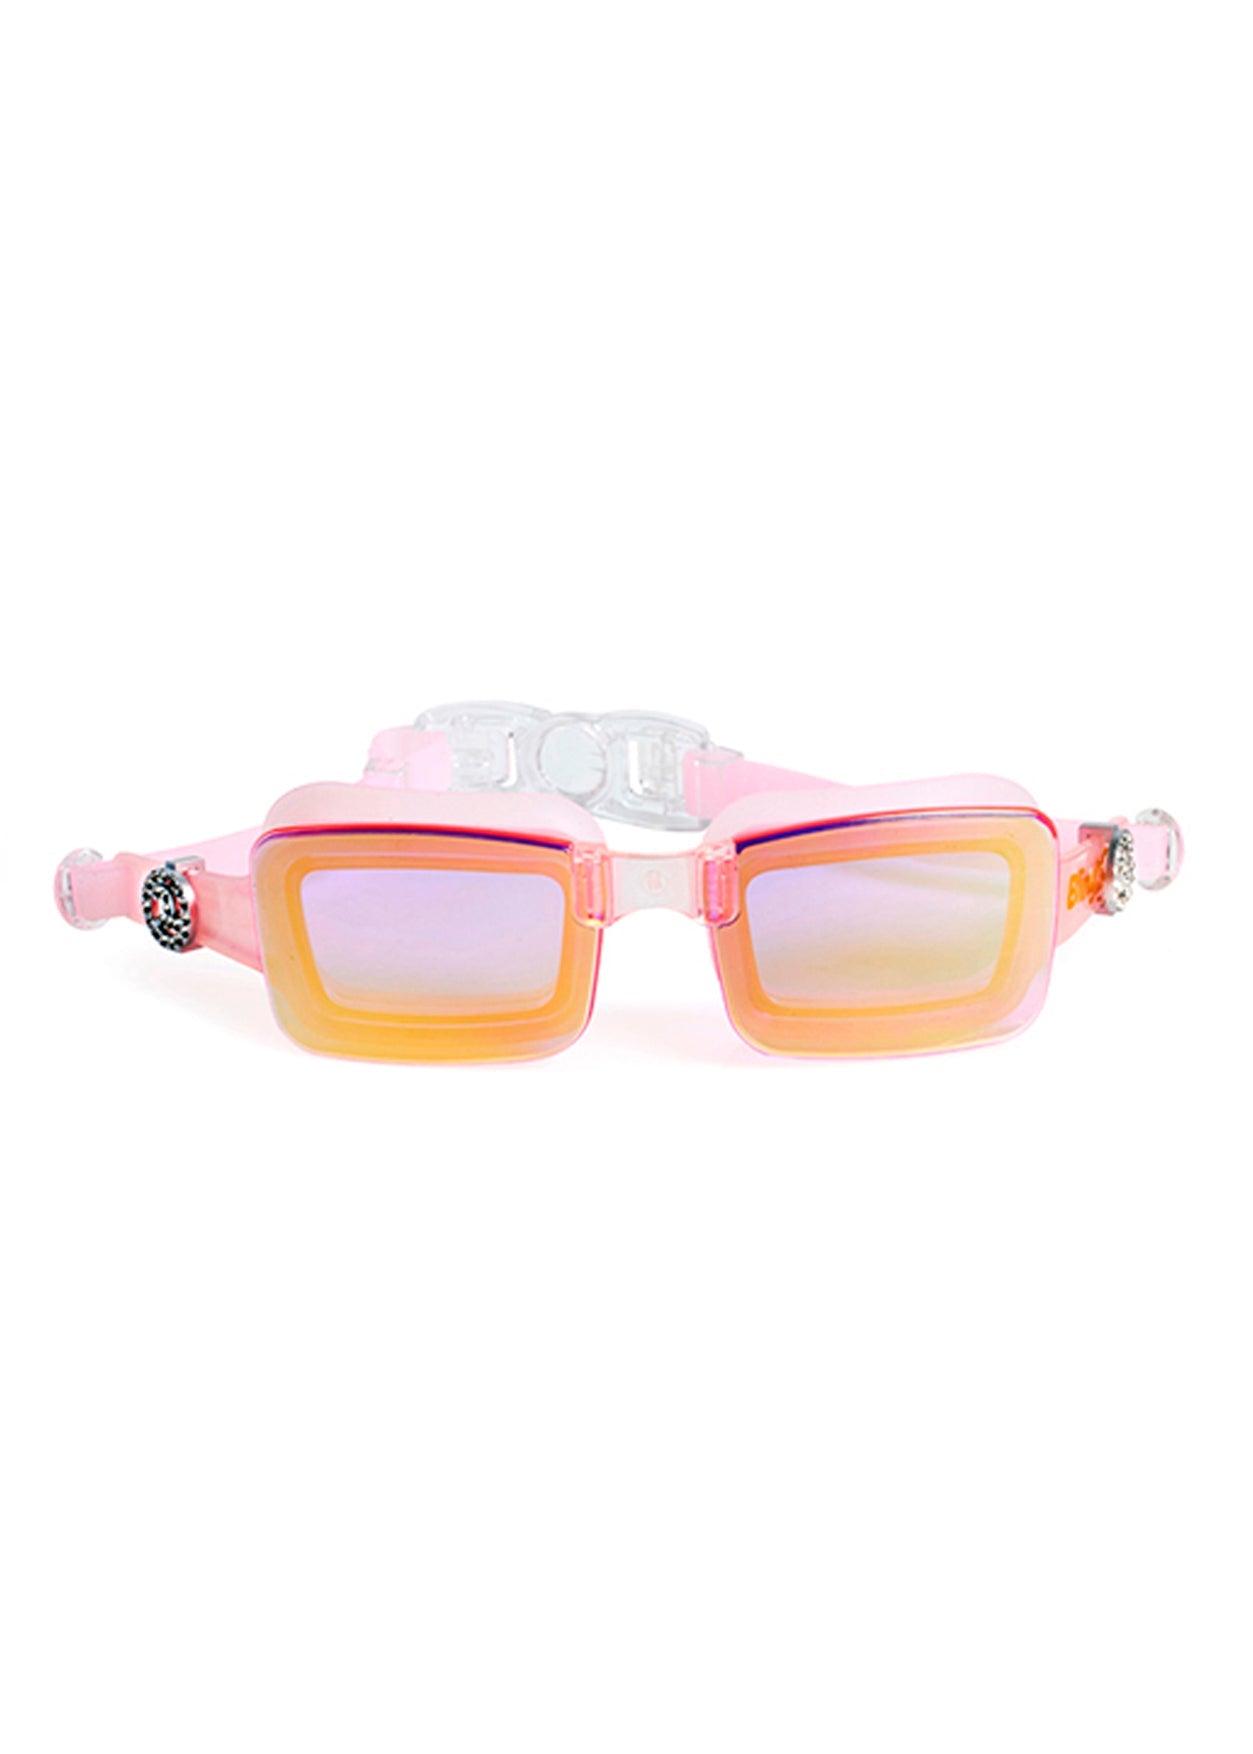 Vivacity Goggles for Girls & Women in Blush